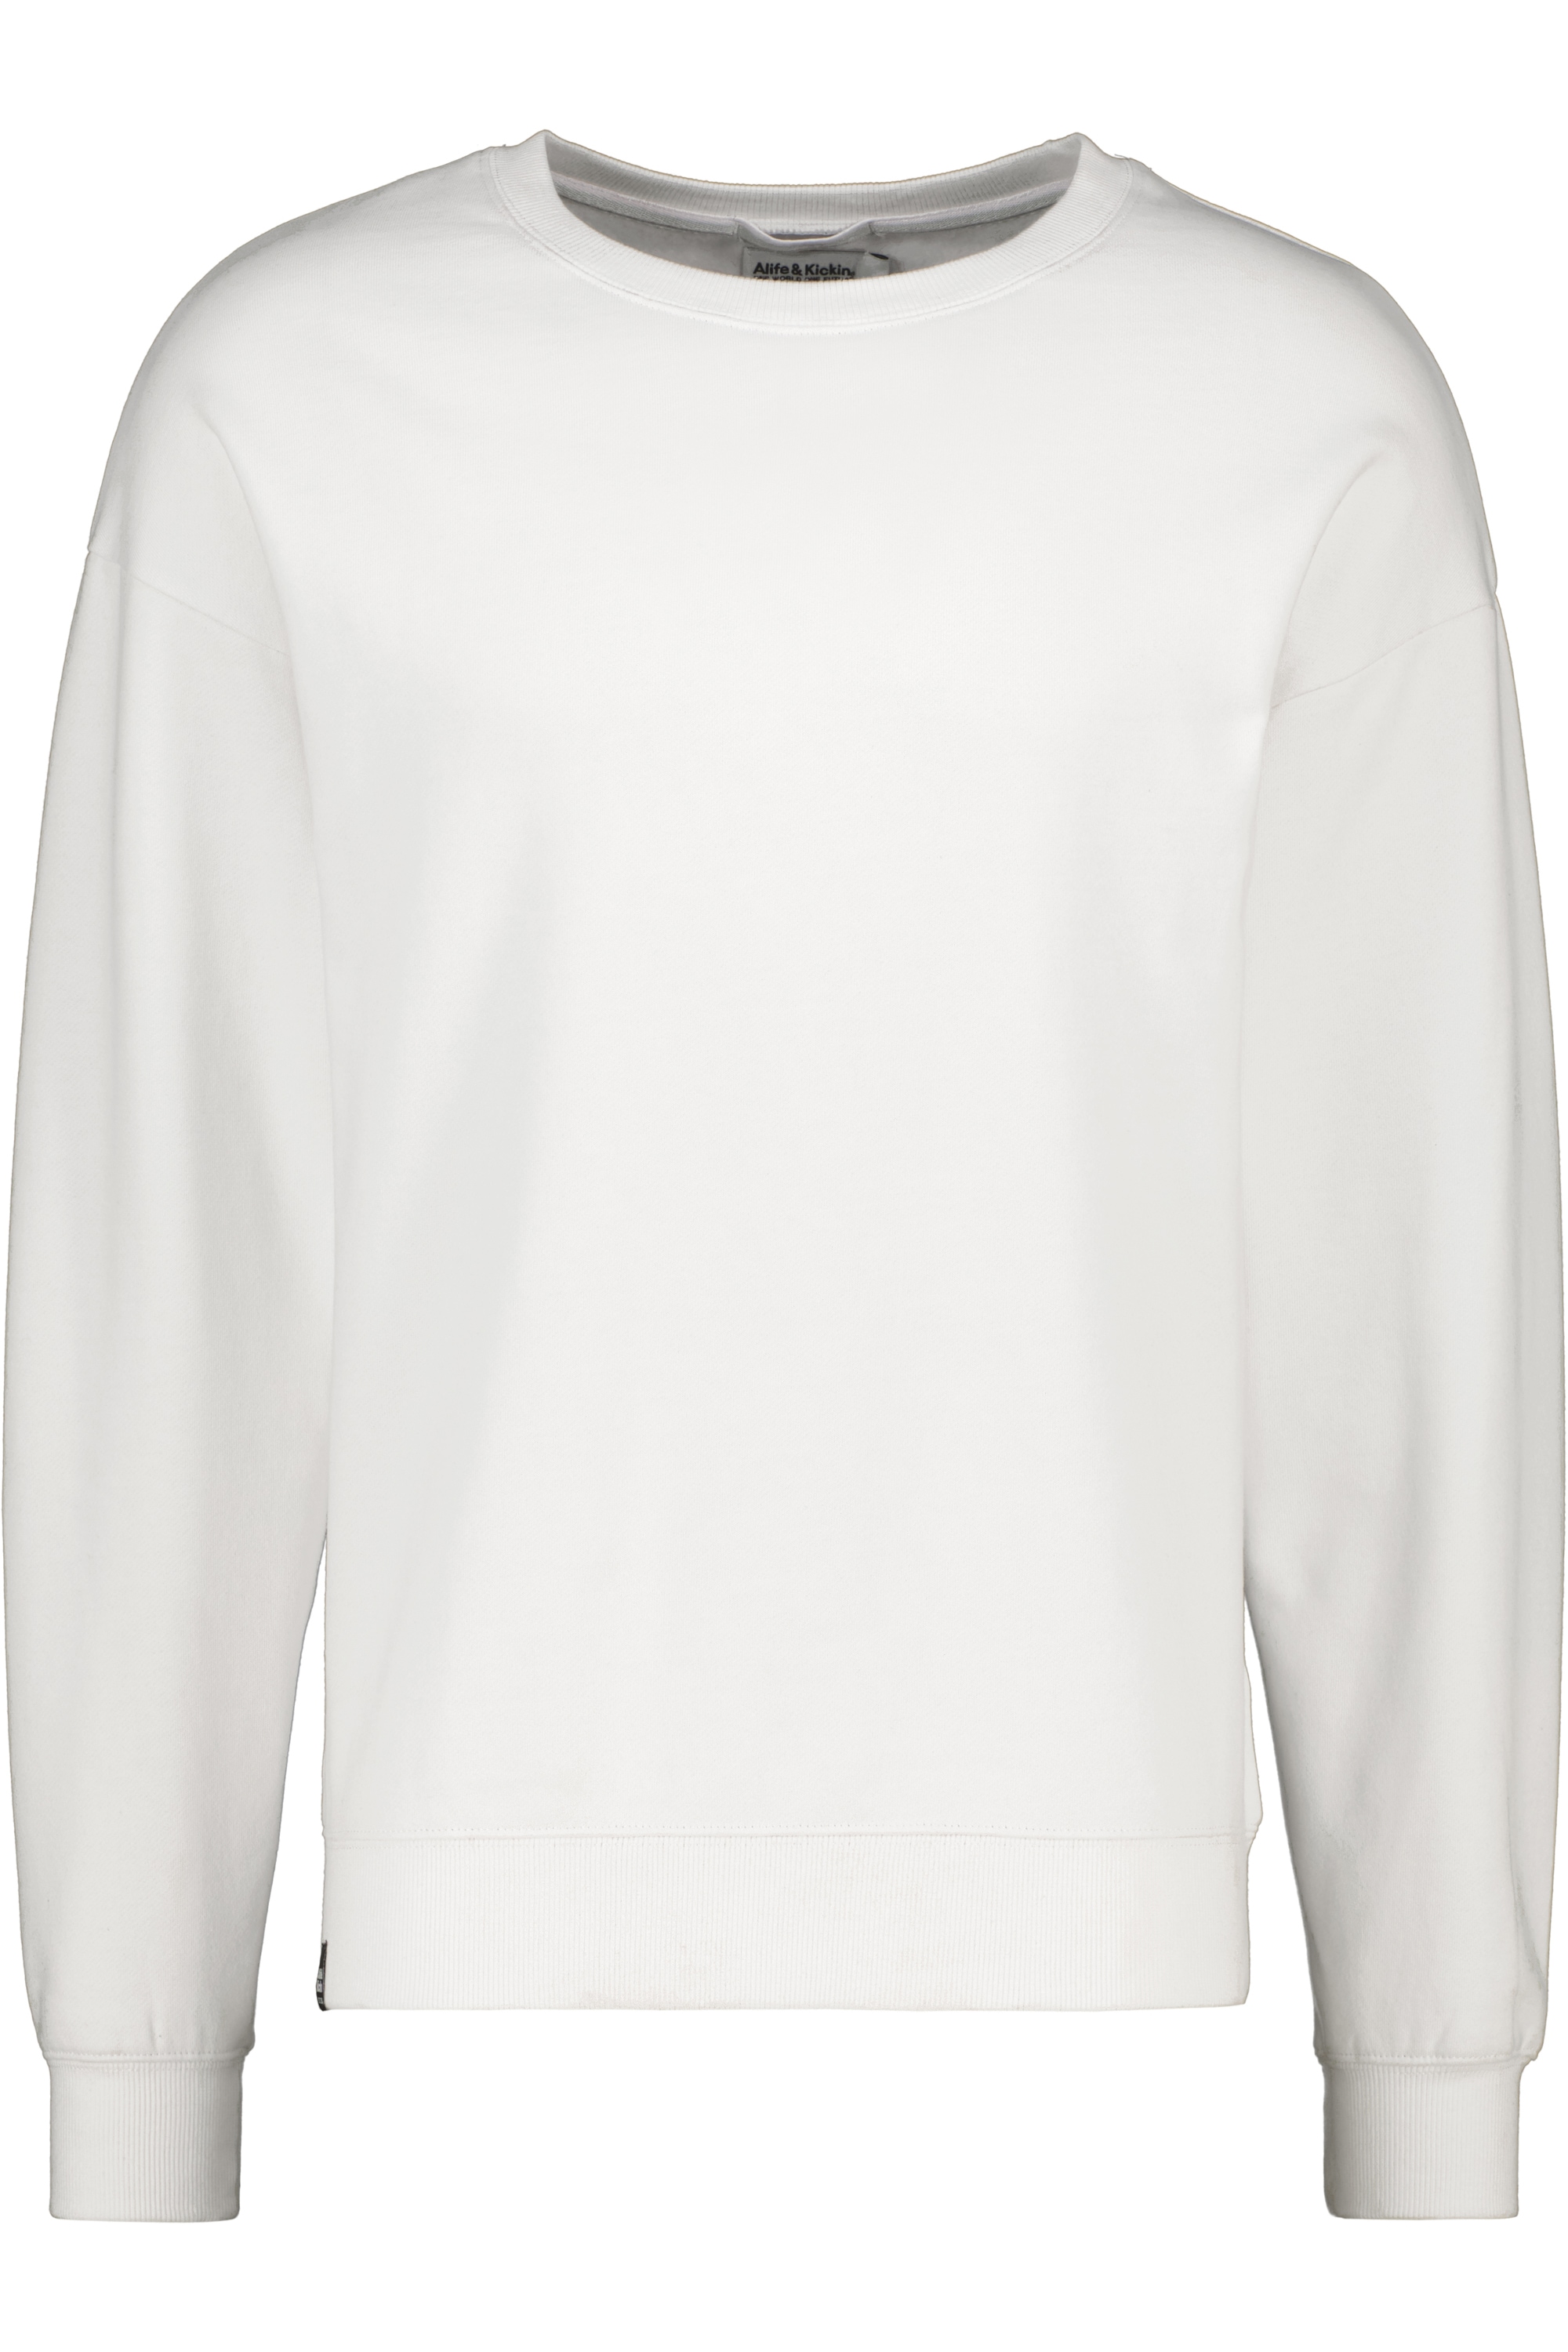 Alife & Kickin Sweatshirt »LucAK A Sweatshirt Herren Rundhalspullover, Pullover«